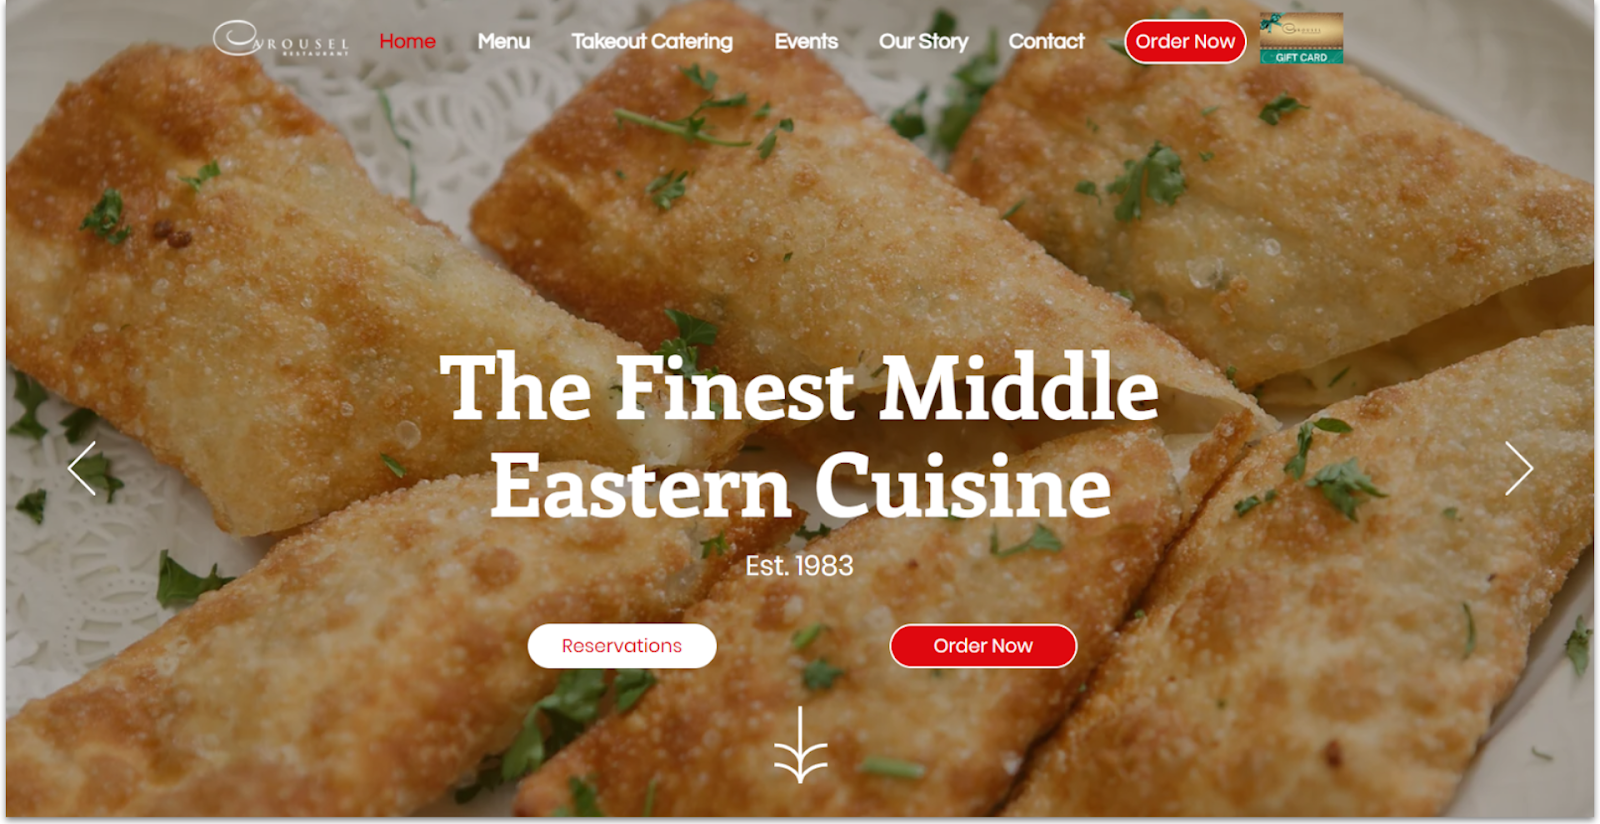 Carousel Restaurant Homepage